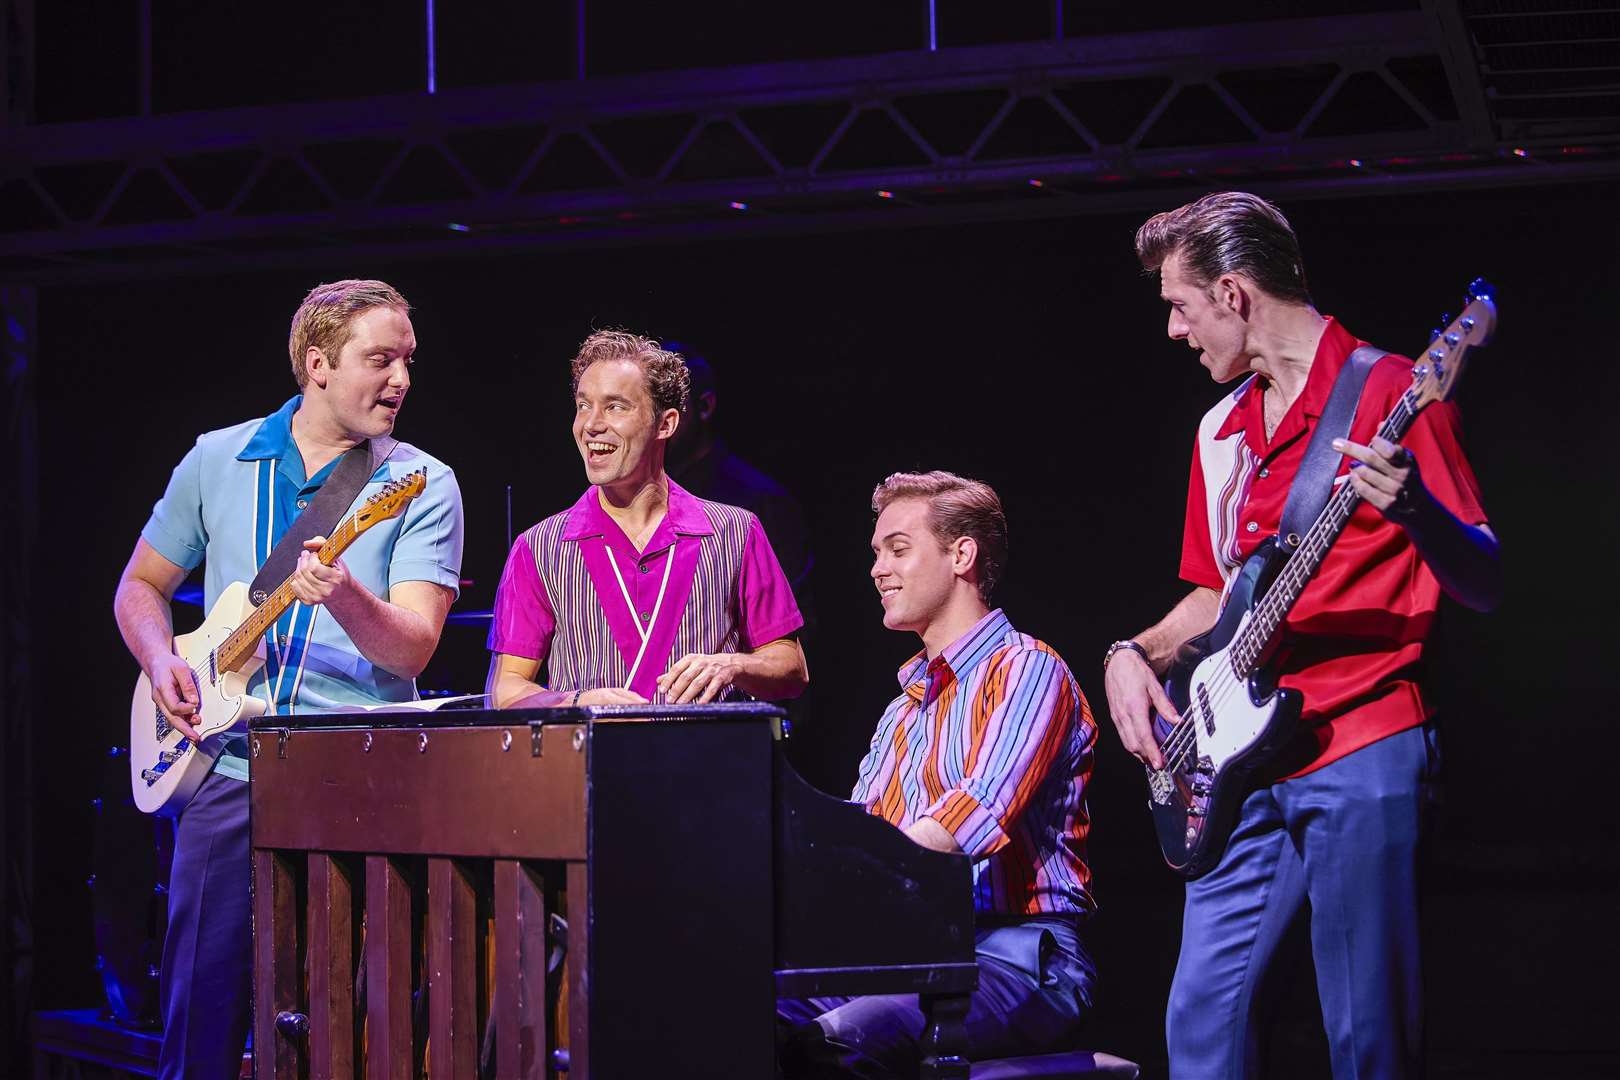 The Jersey Boys on stage. Picture: Birgit + Ralf Brinkhoff